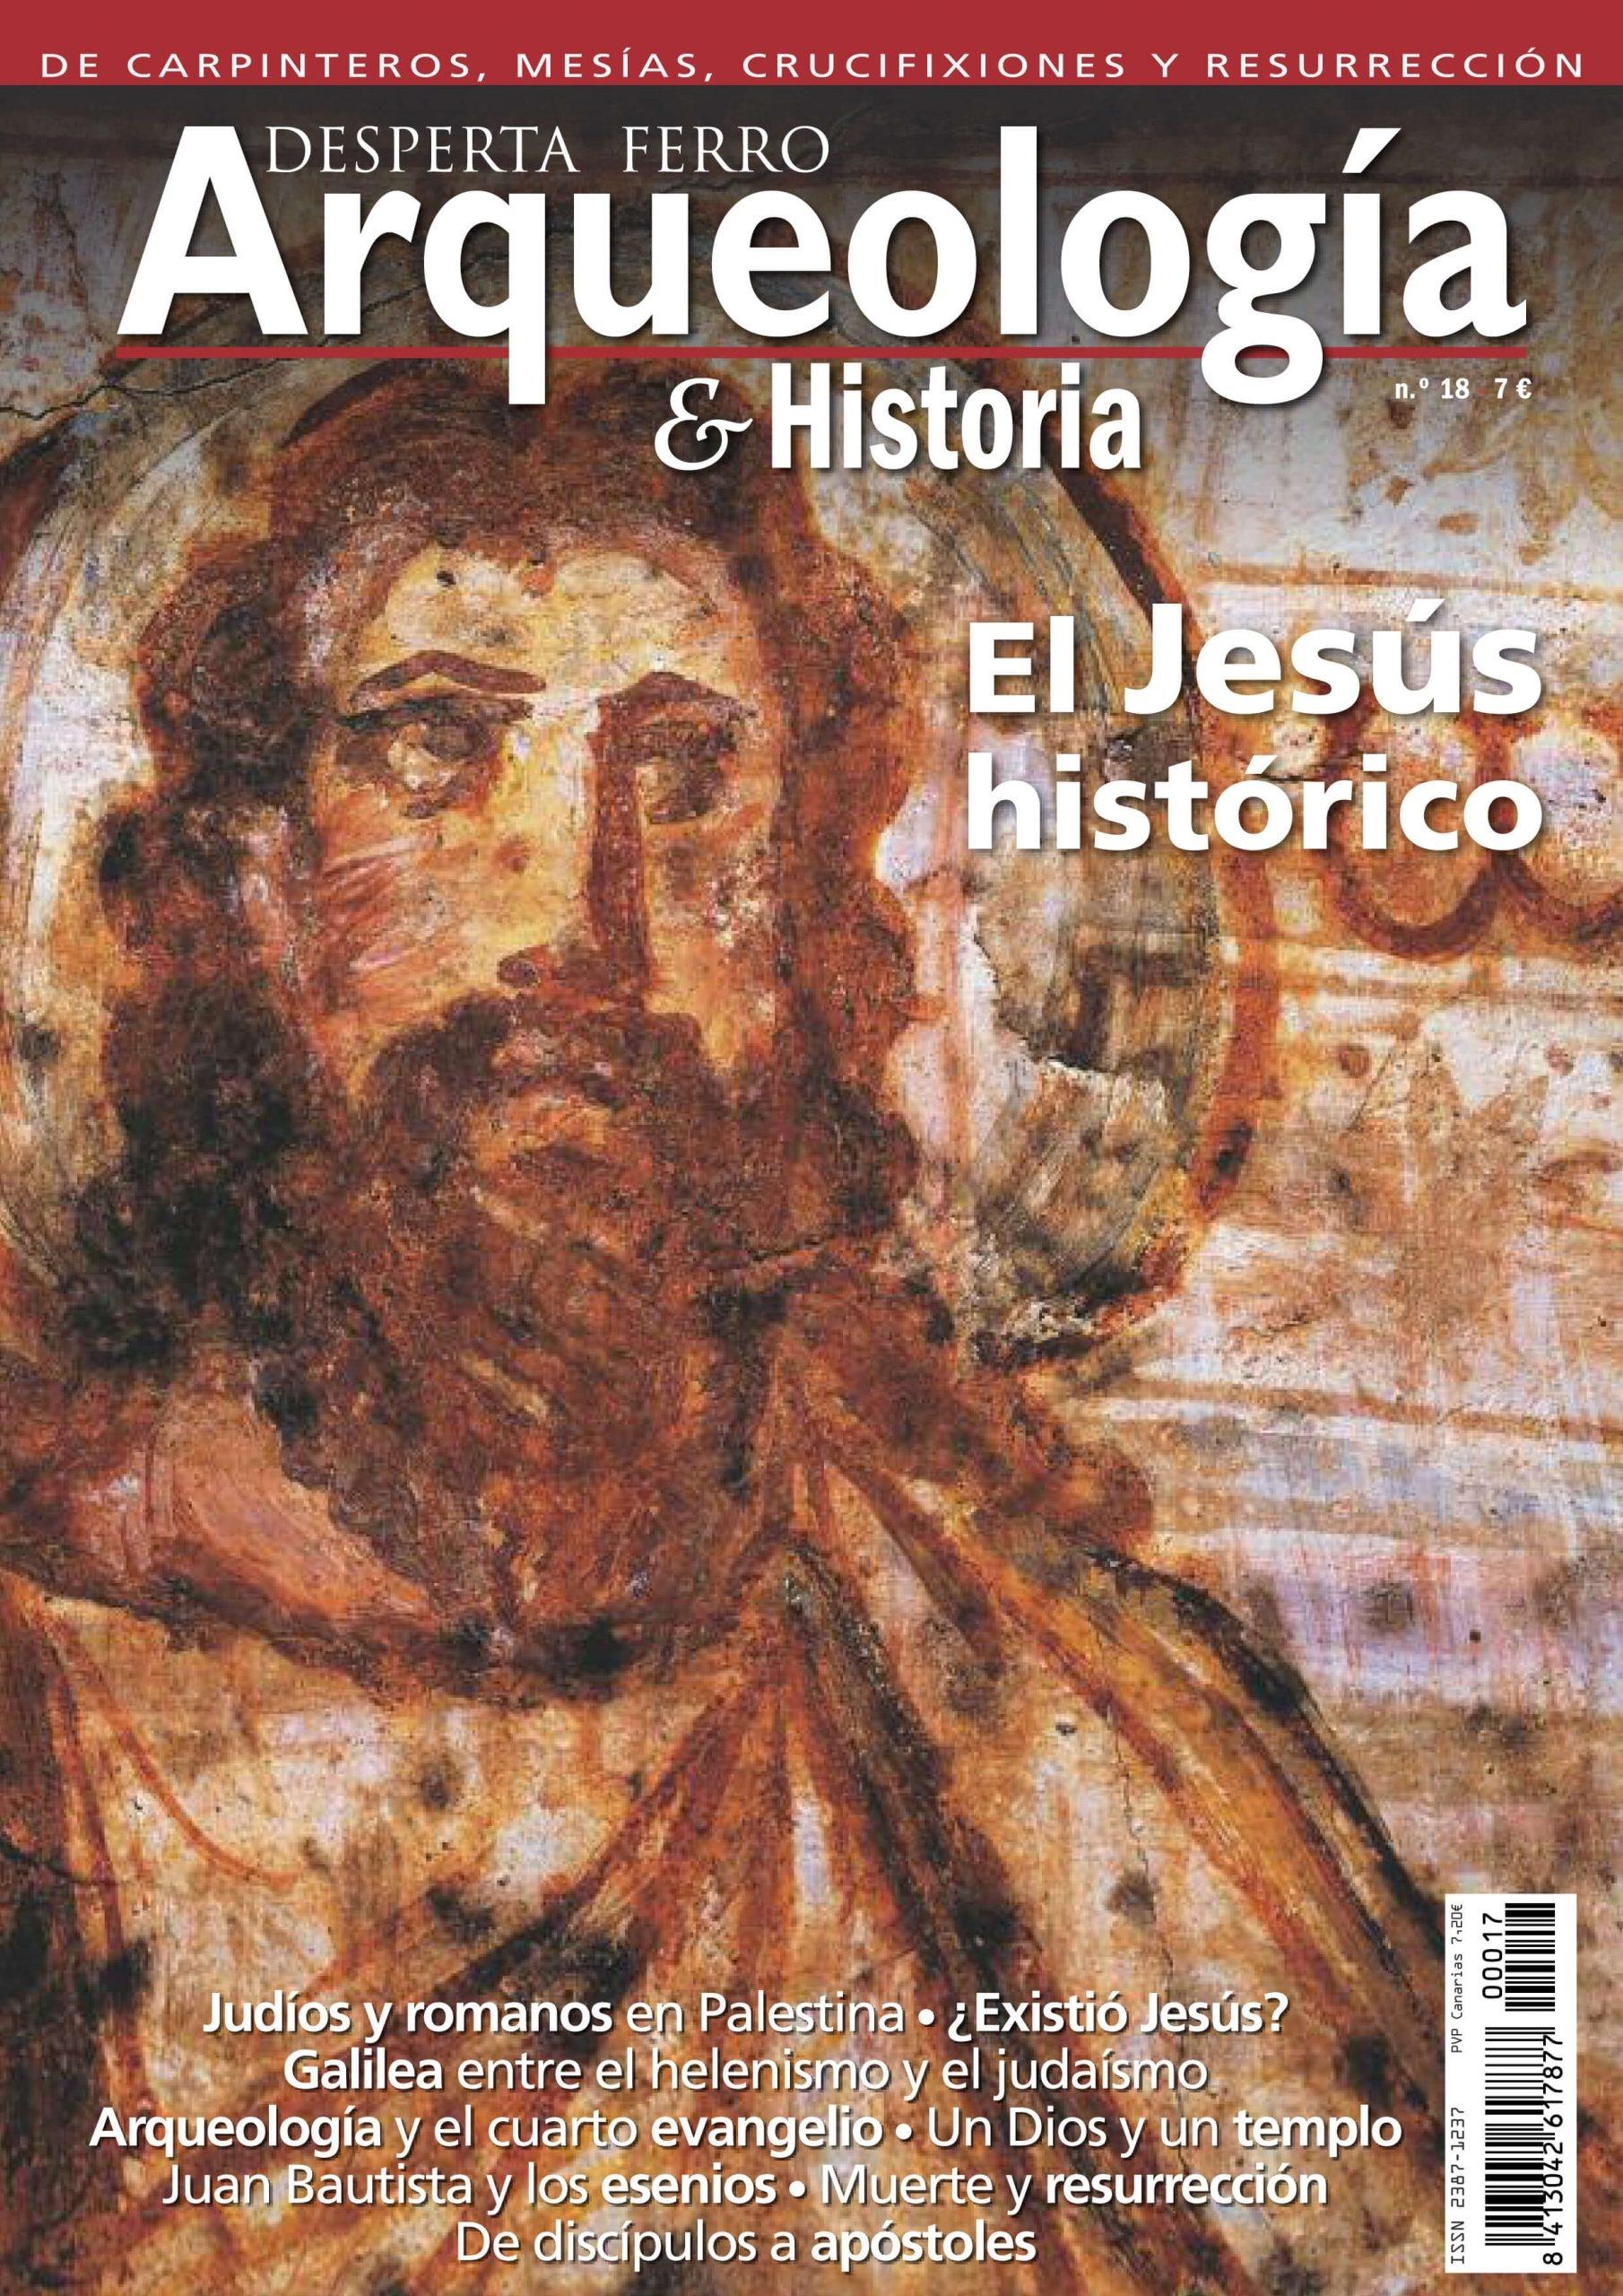 Desperta Ferro. Arqueología & Historia nº 18: El Jesús histórico. 